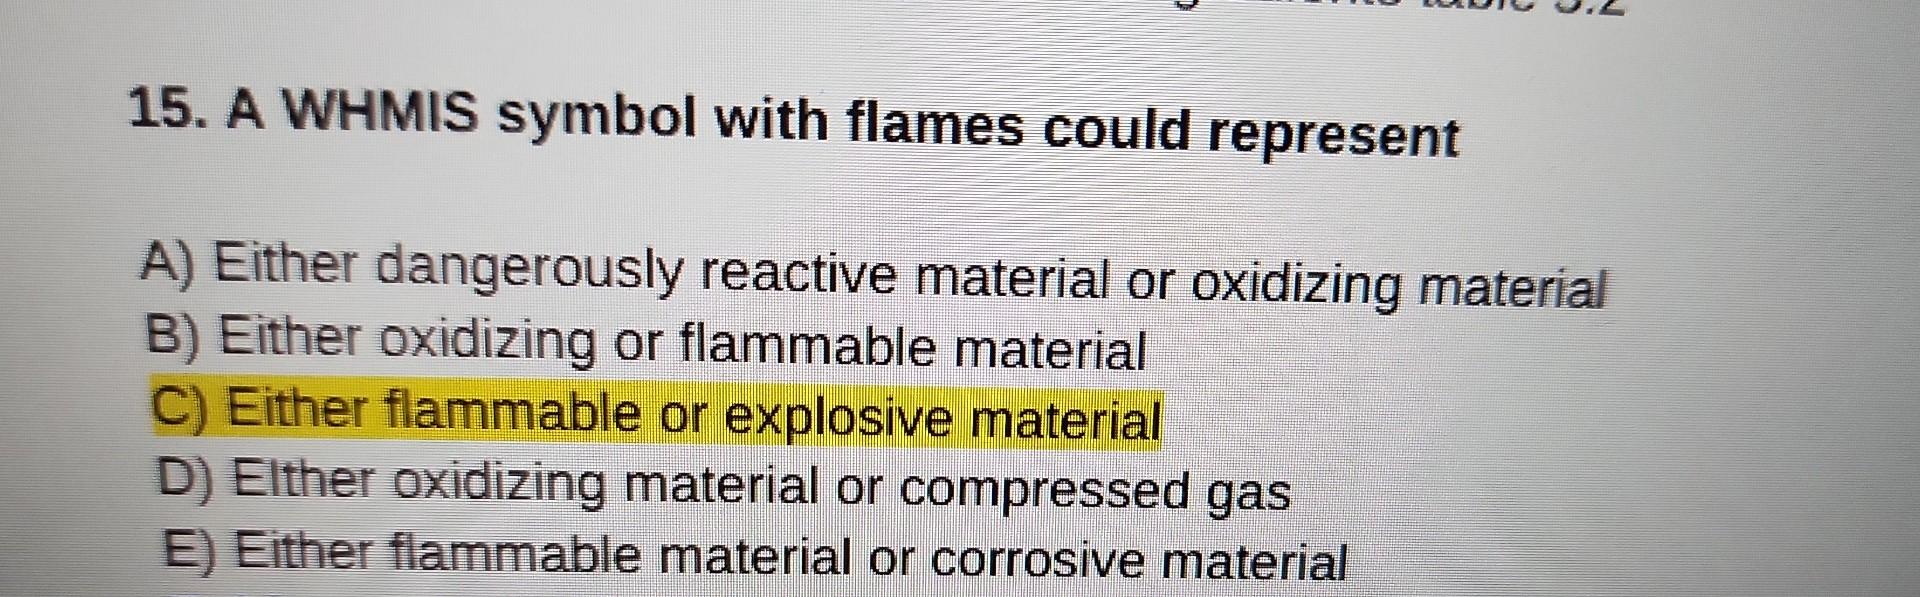 flammable whmis symbol